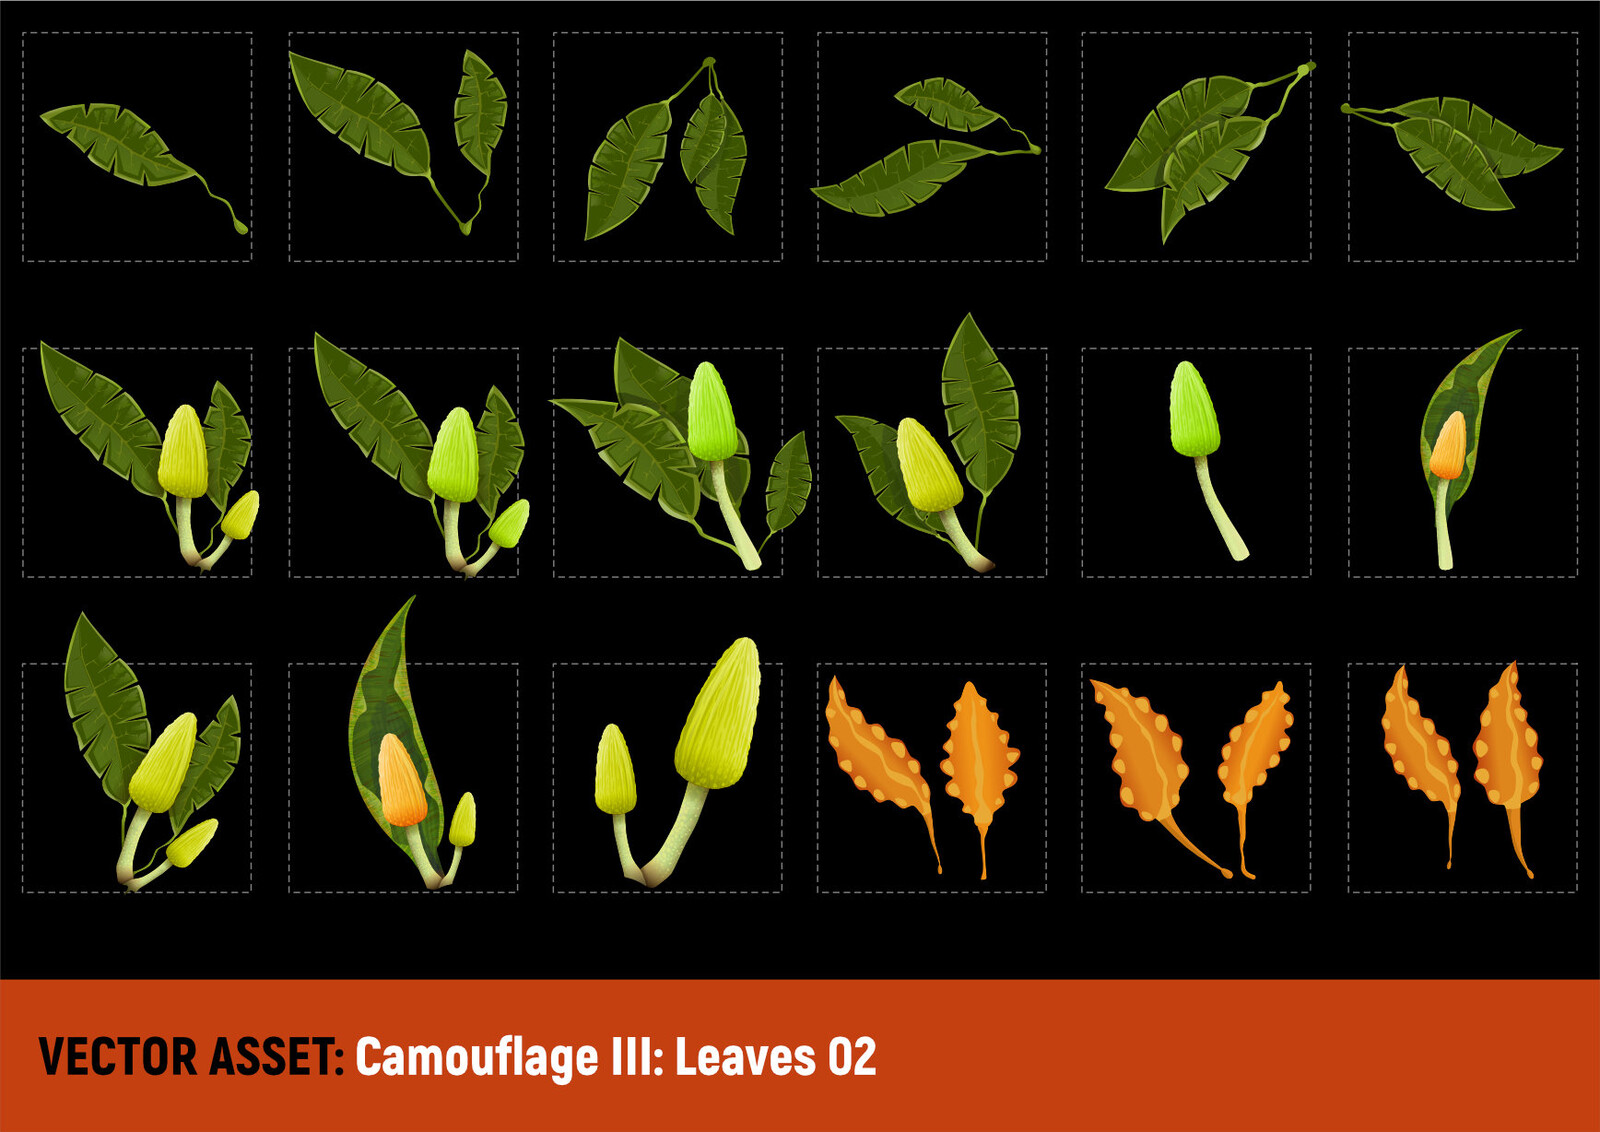 Camouflage III: Leaves